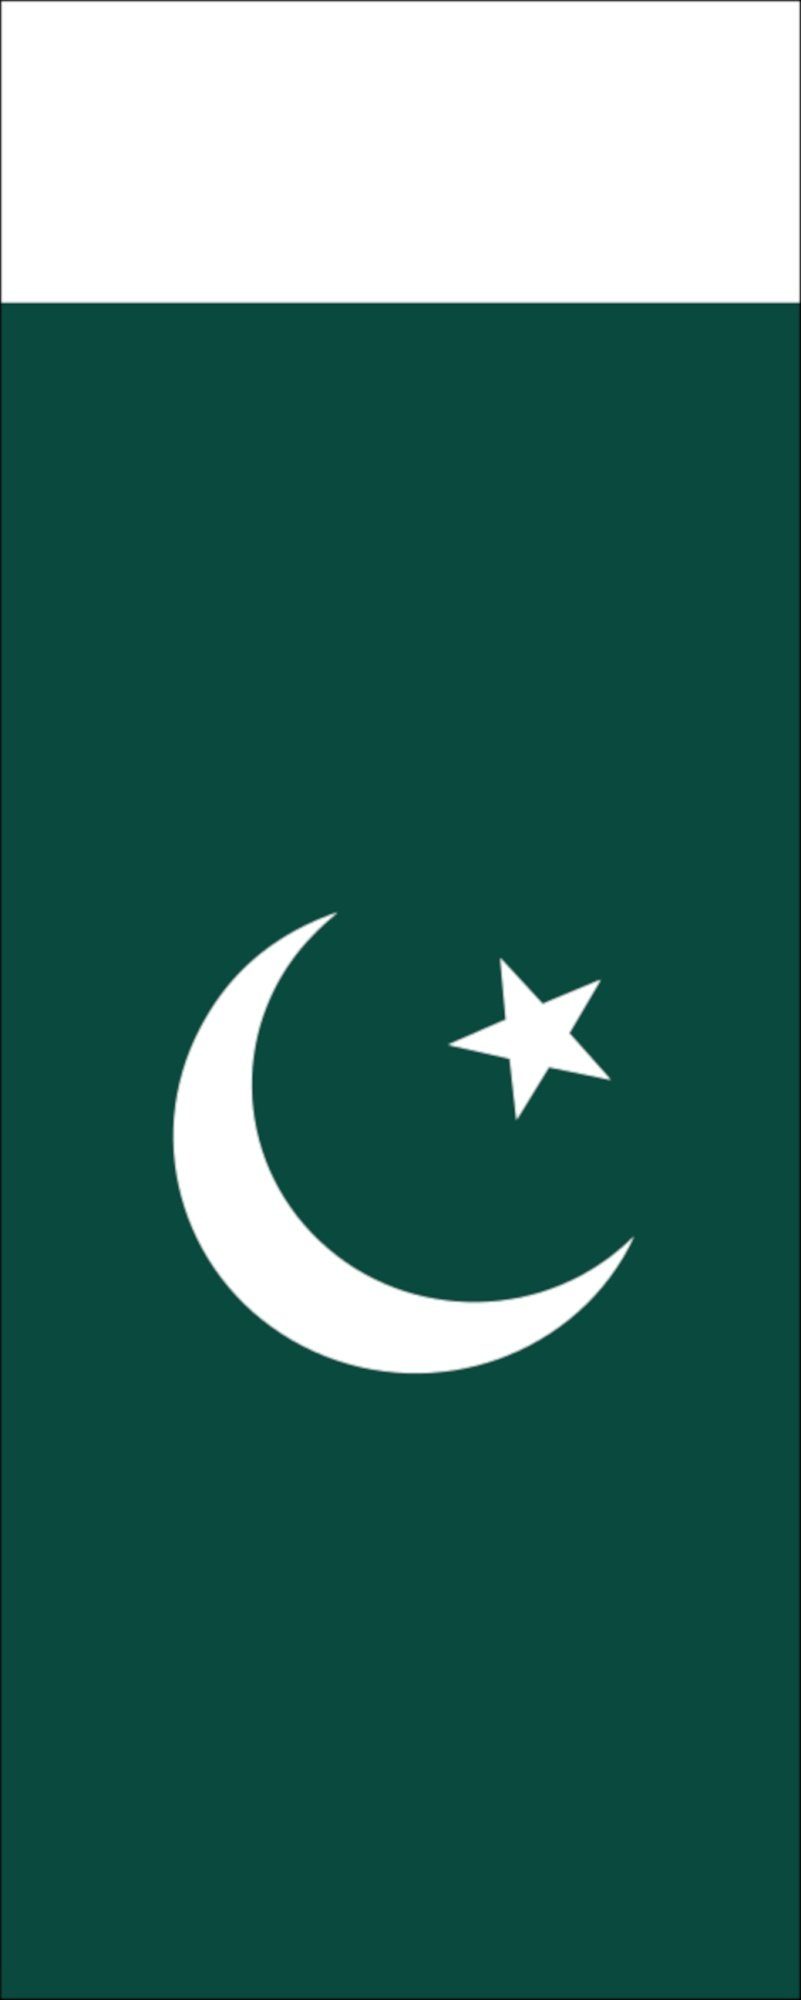 g/m² 110 Pakistan Flagge Flagge Hochformat flaggenmeer